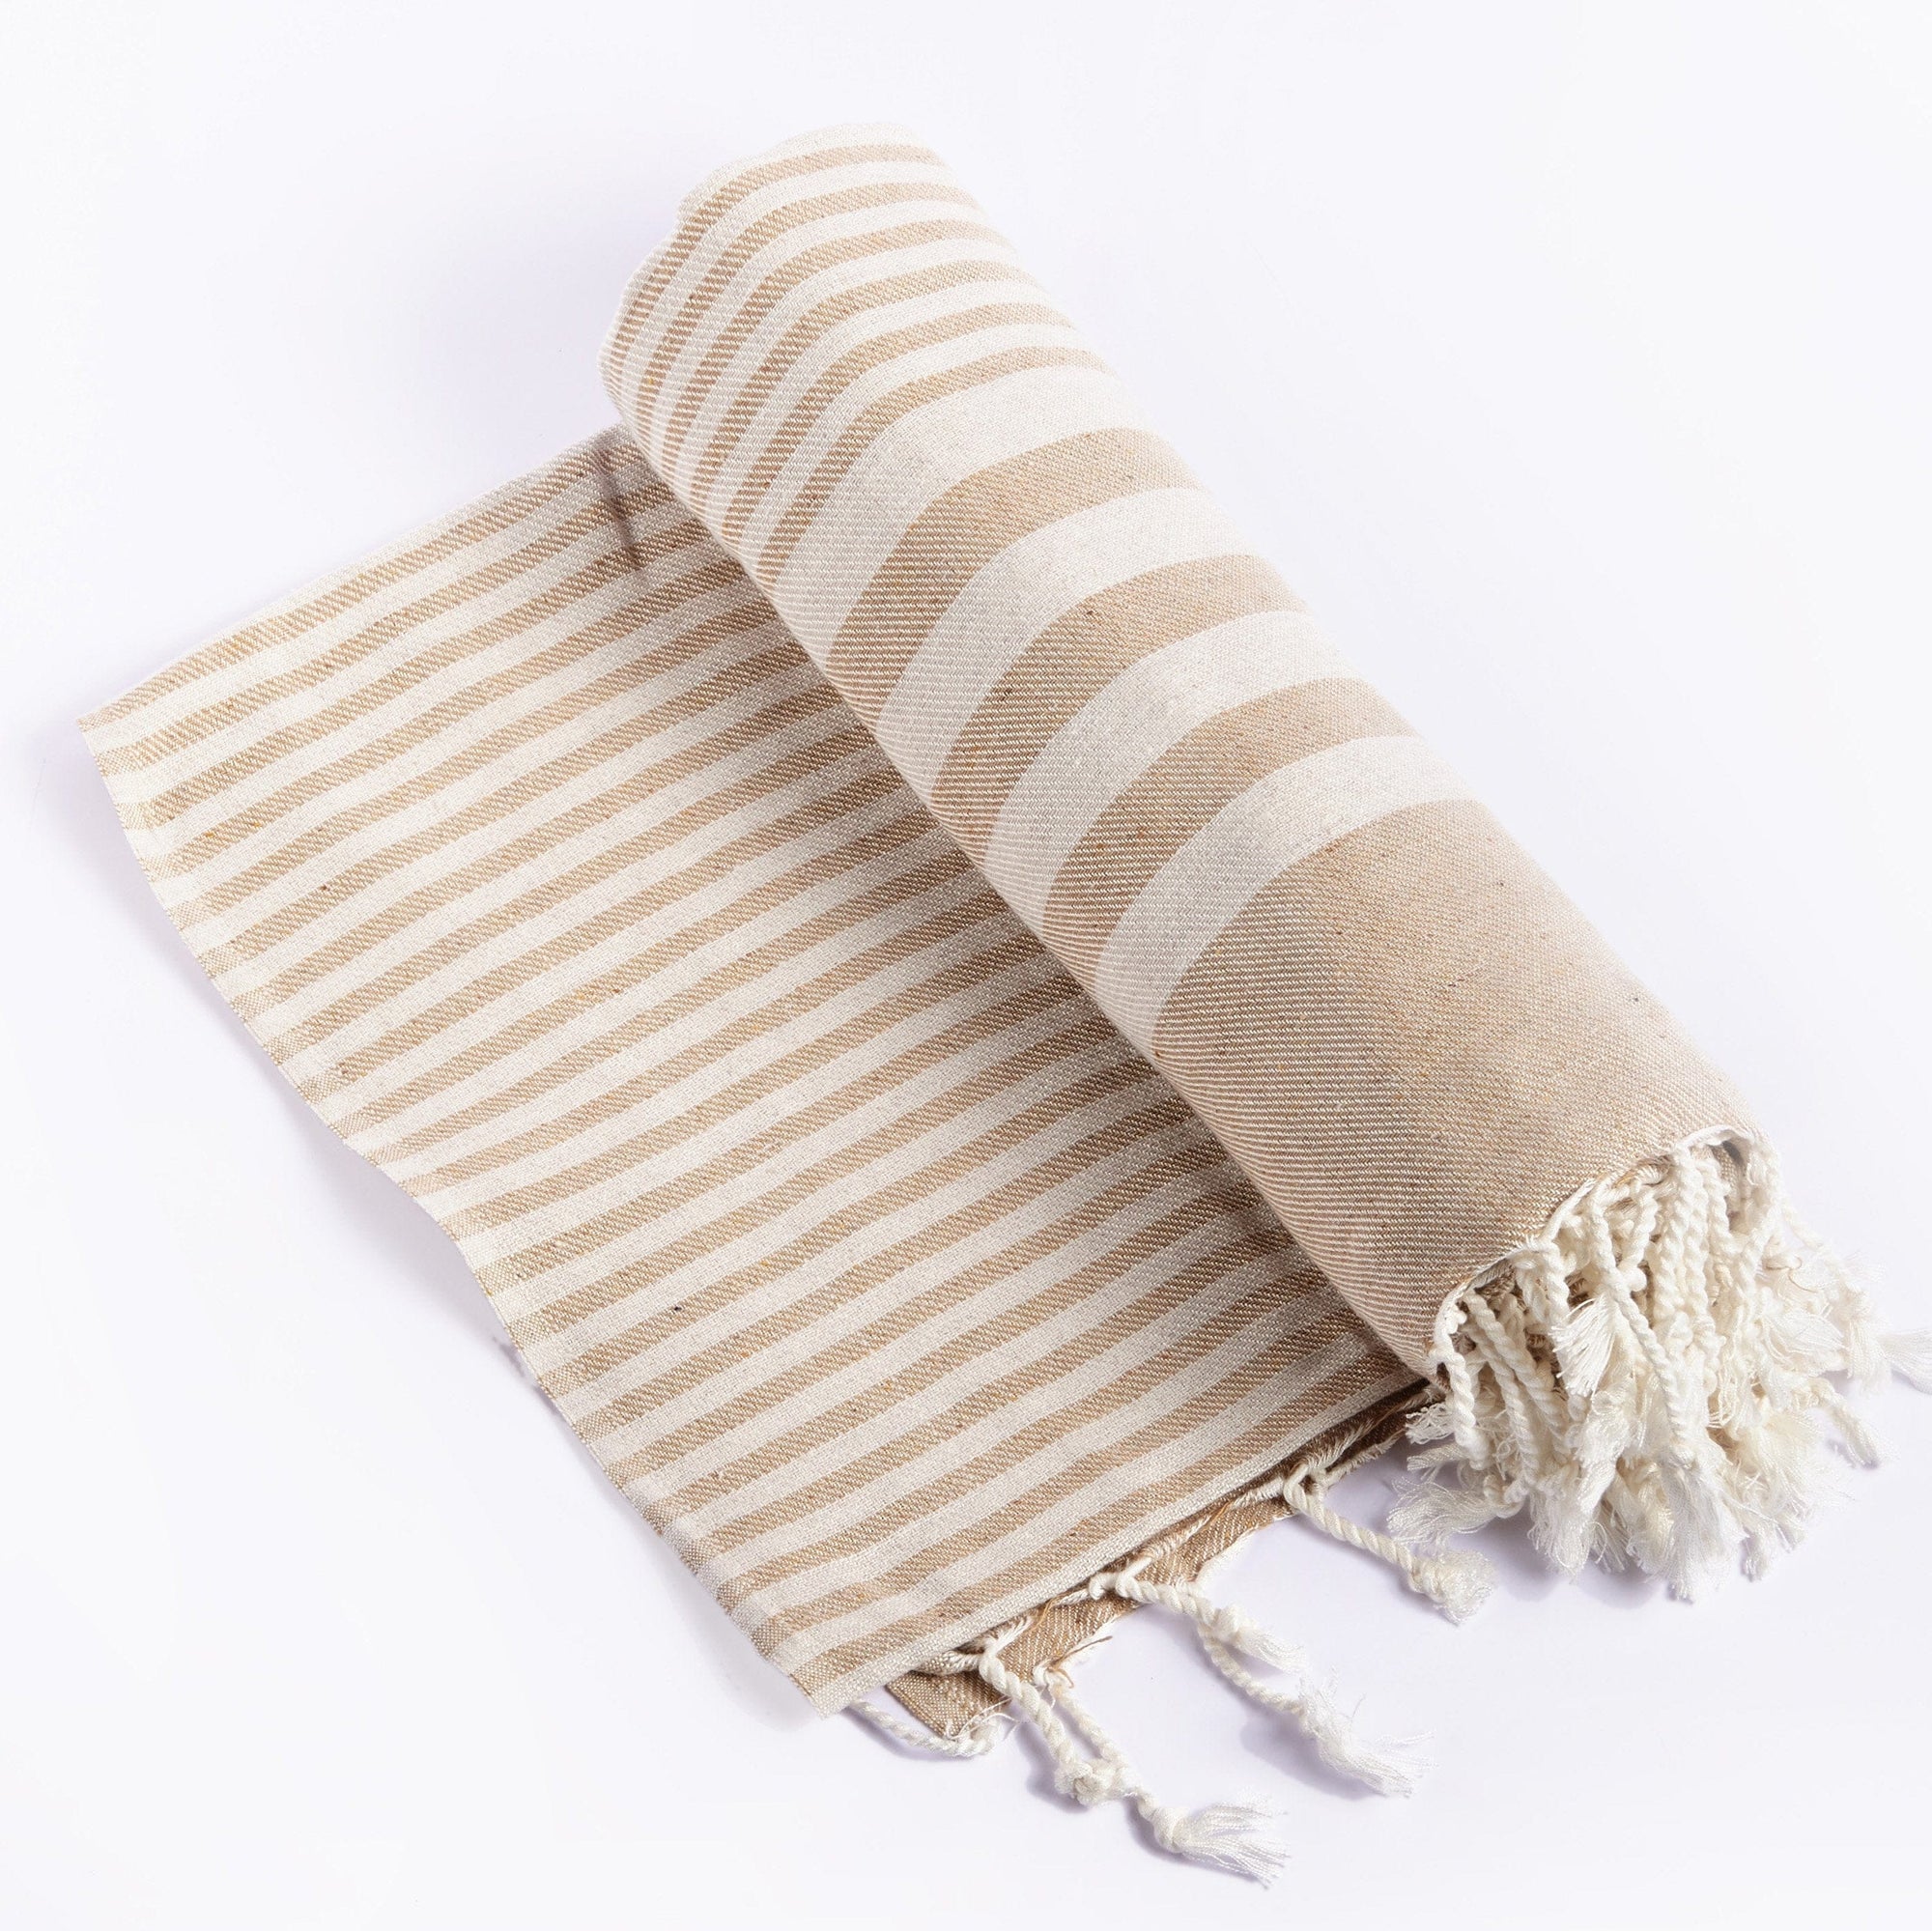 Fethiye Striped Throw Blanket - Beige